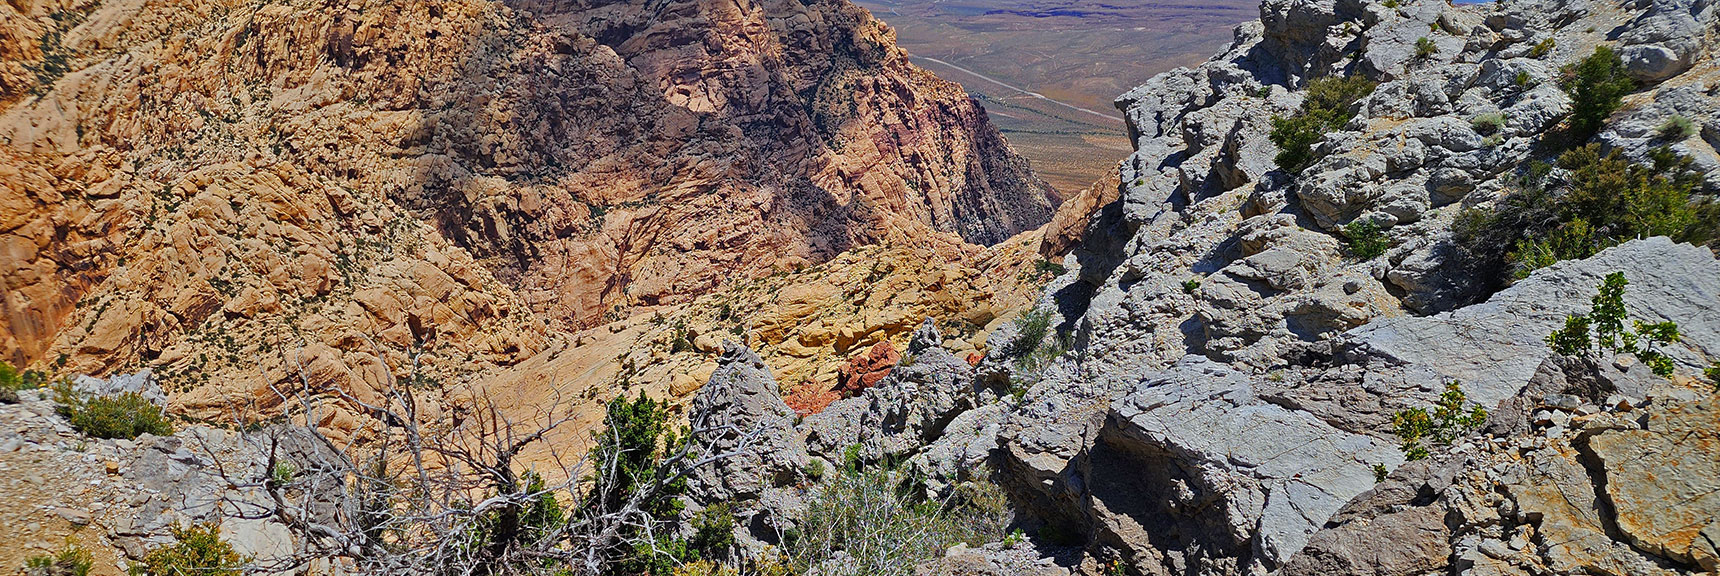 Deep Look into Canyon Below Upper Crest Ridgeline | Little Zion | Rainbow Mountain Wilderness, Nevada